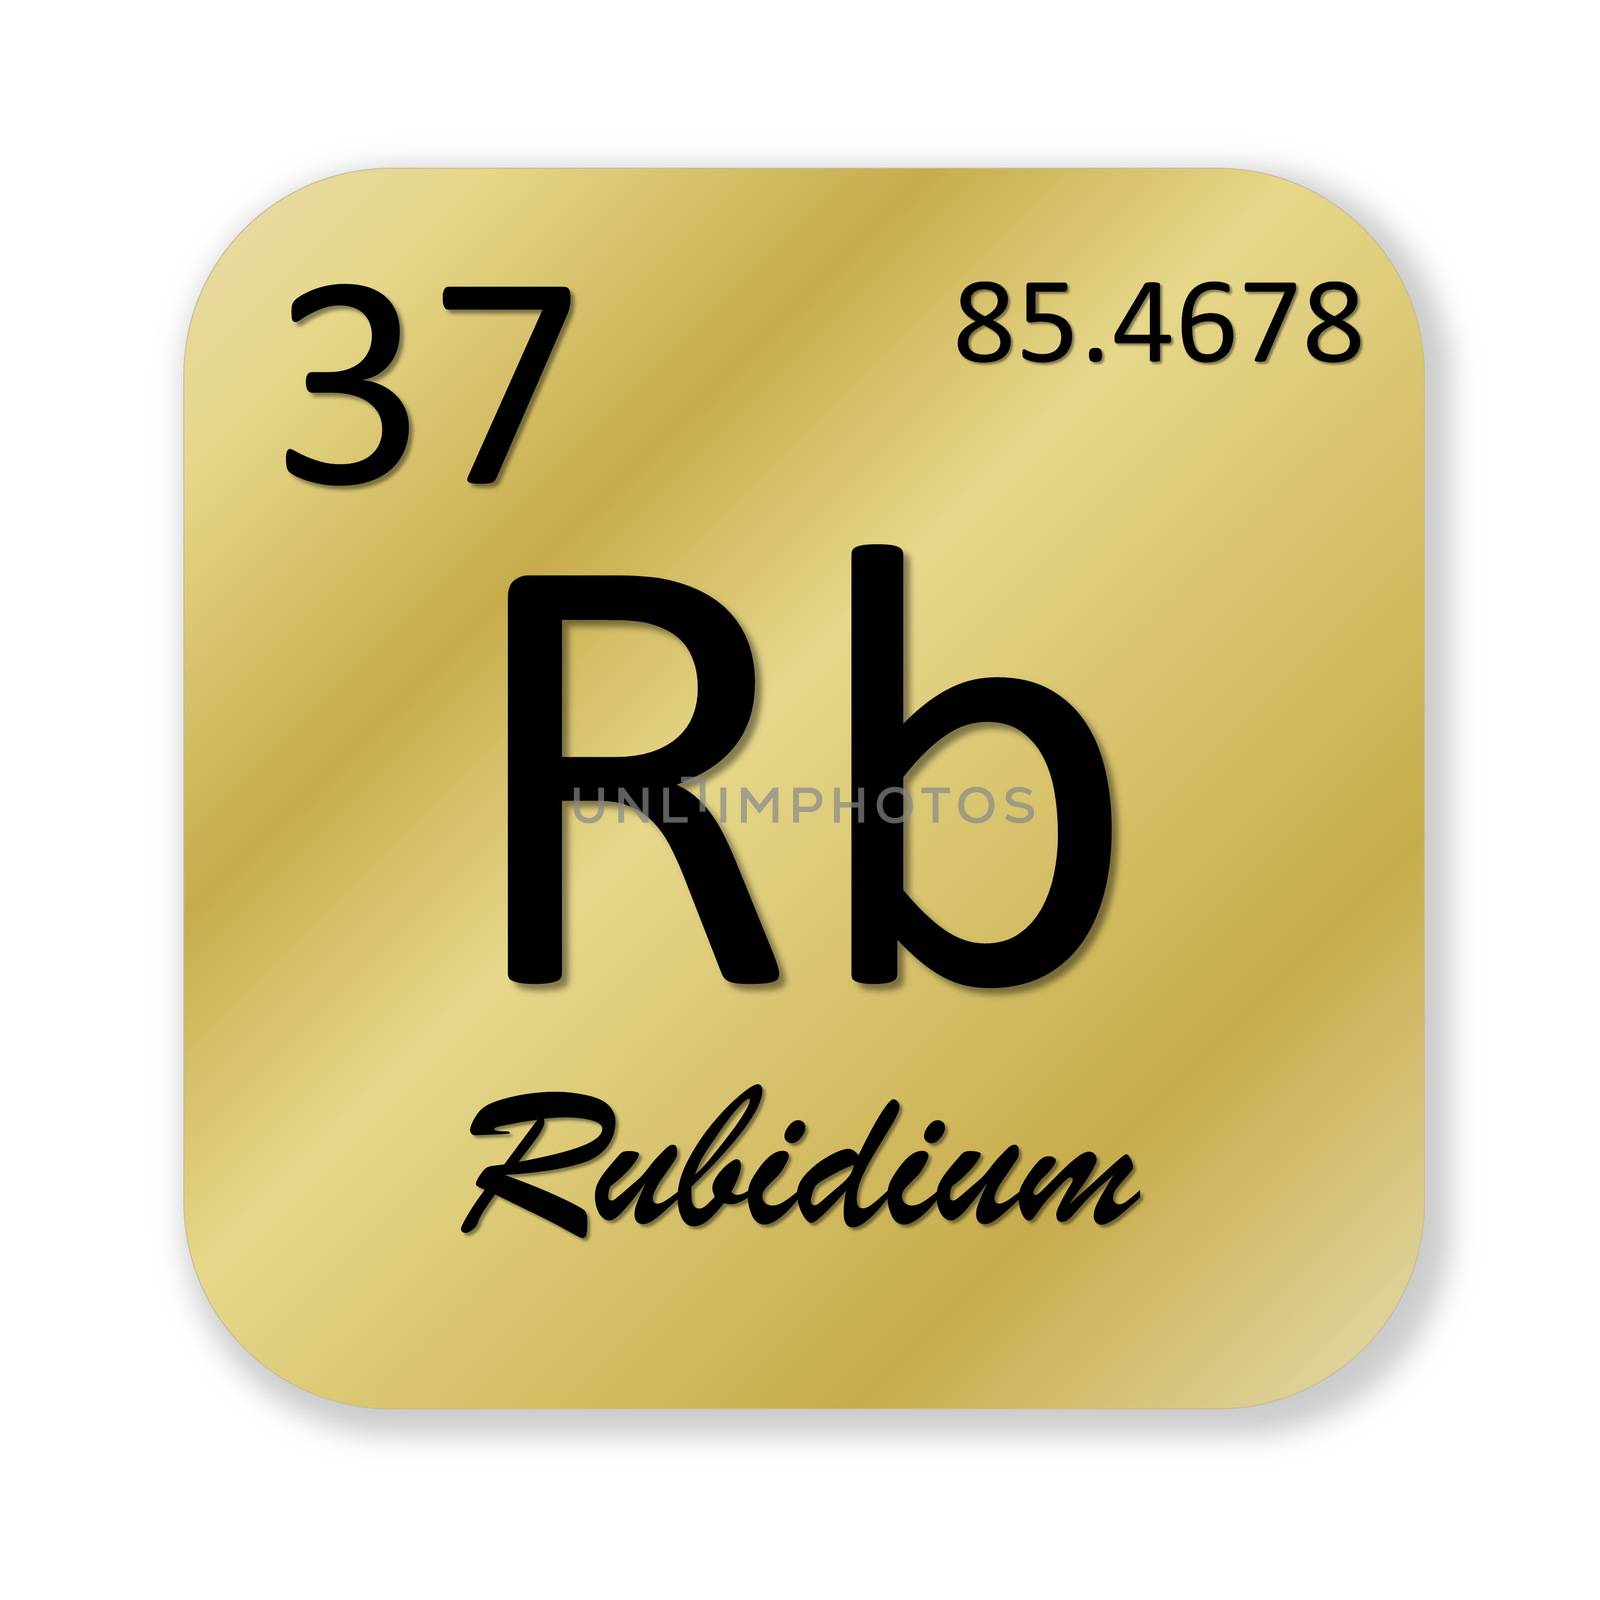 Black rubidium element into golden square shape isolated in white background